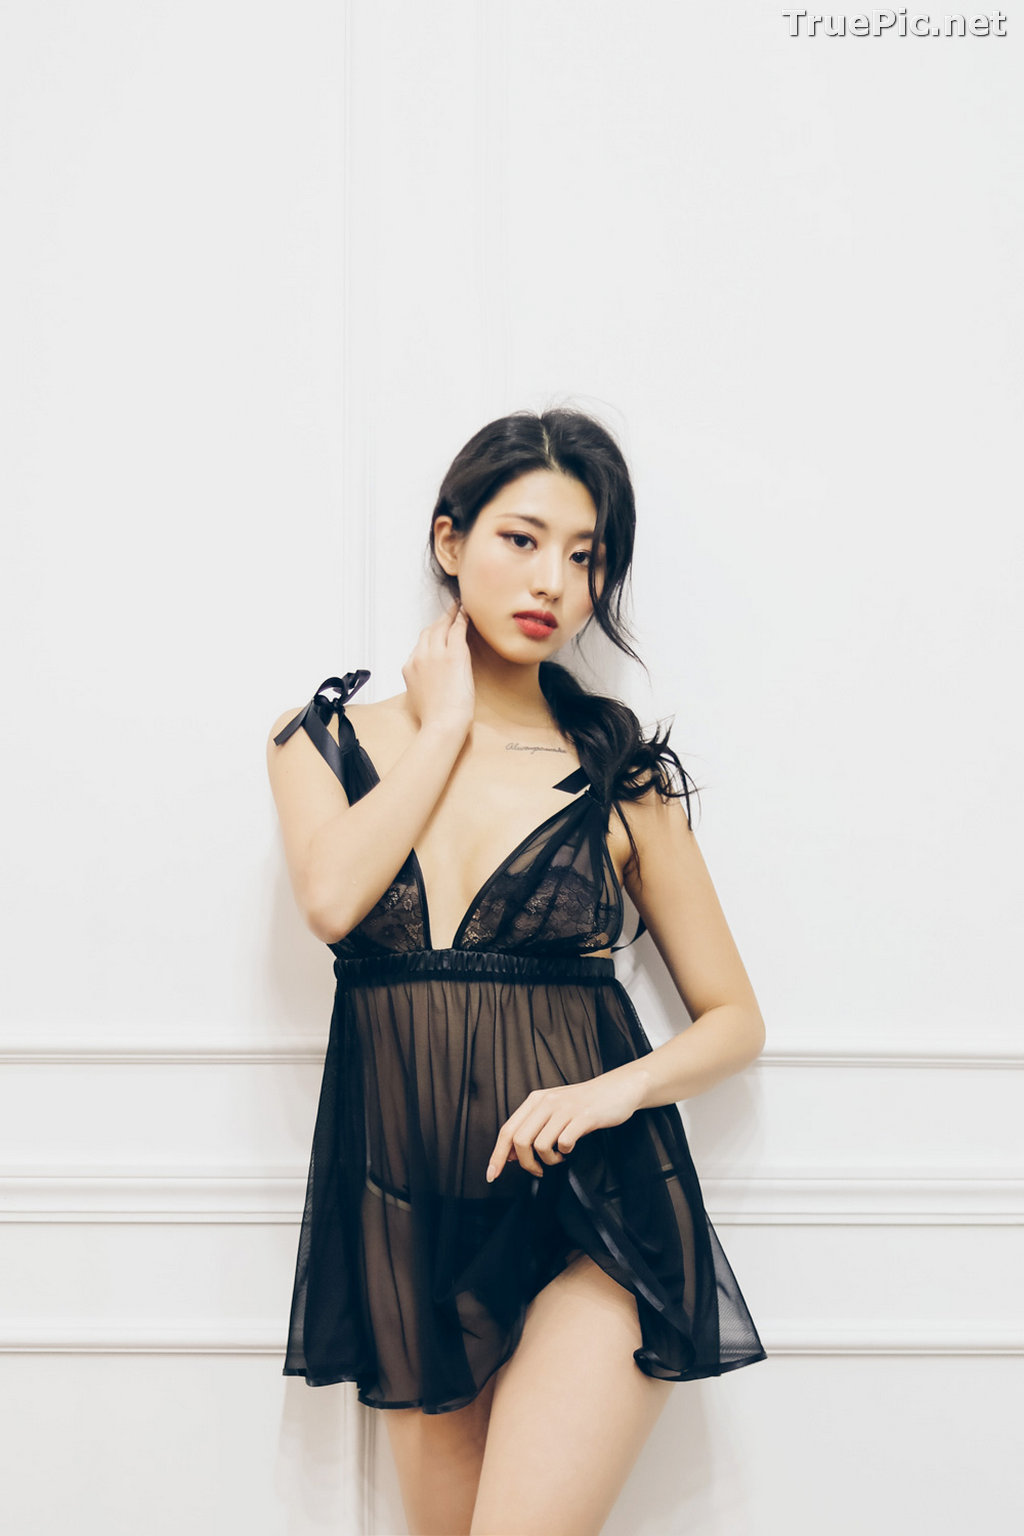 Image Jung Yuna - Korean Fashion Model - Black Transparent Lingerie Set - TruePic.net - Picture-17